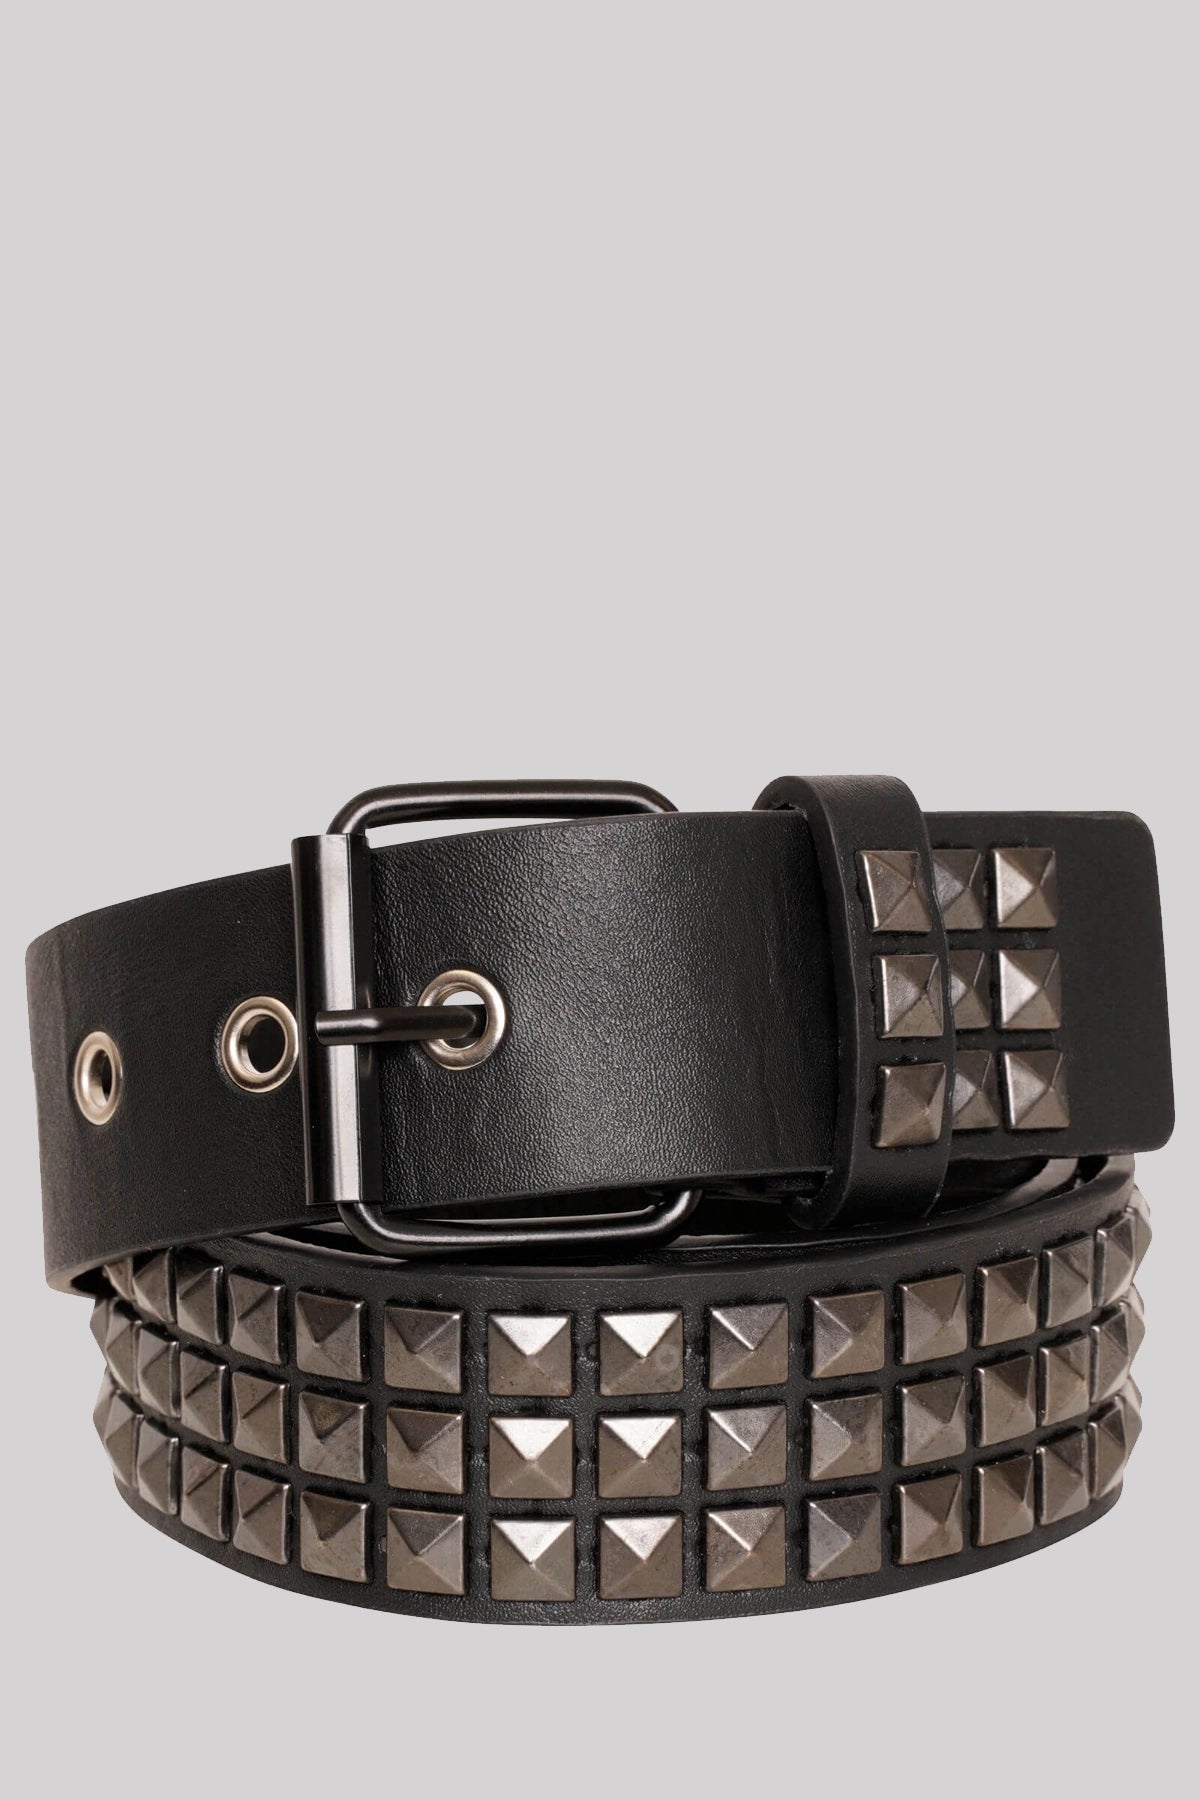 Ro Rox Kraz Pin Buckle Casual Studded Belt, Black & Grey